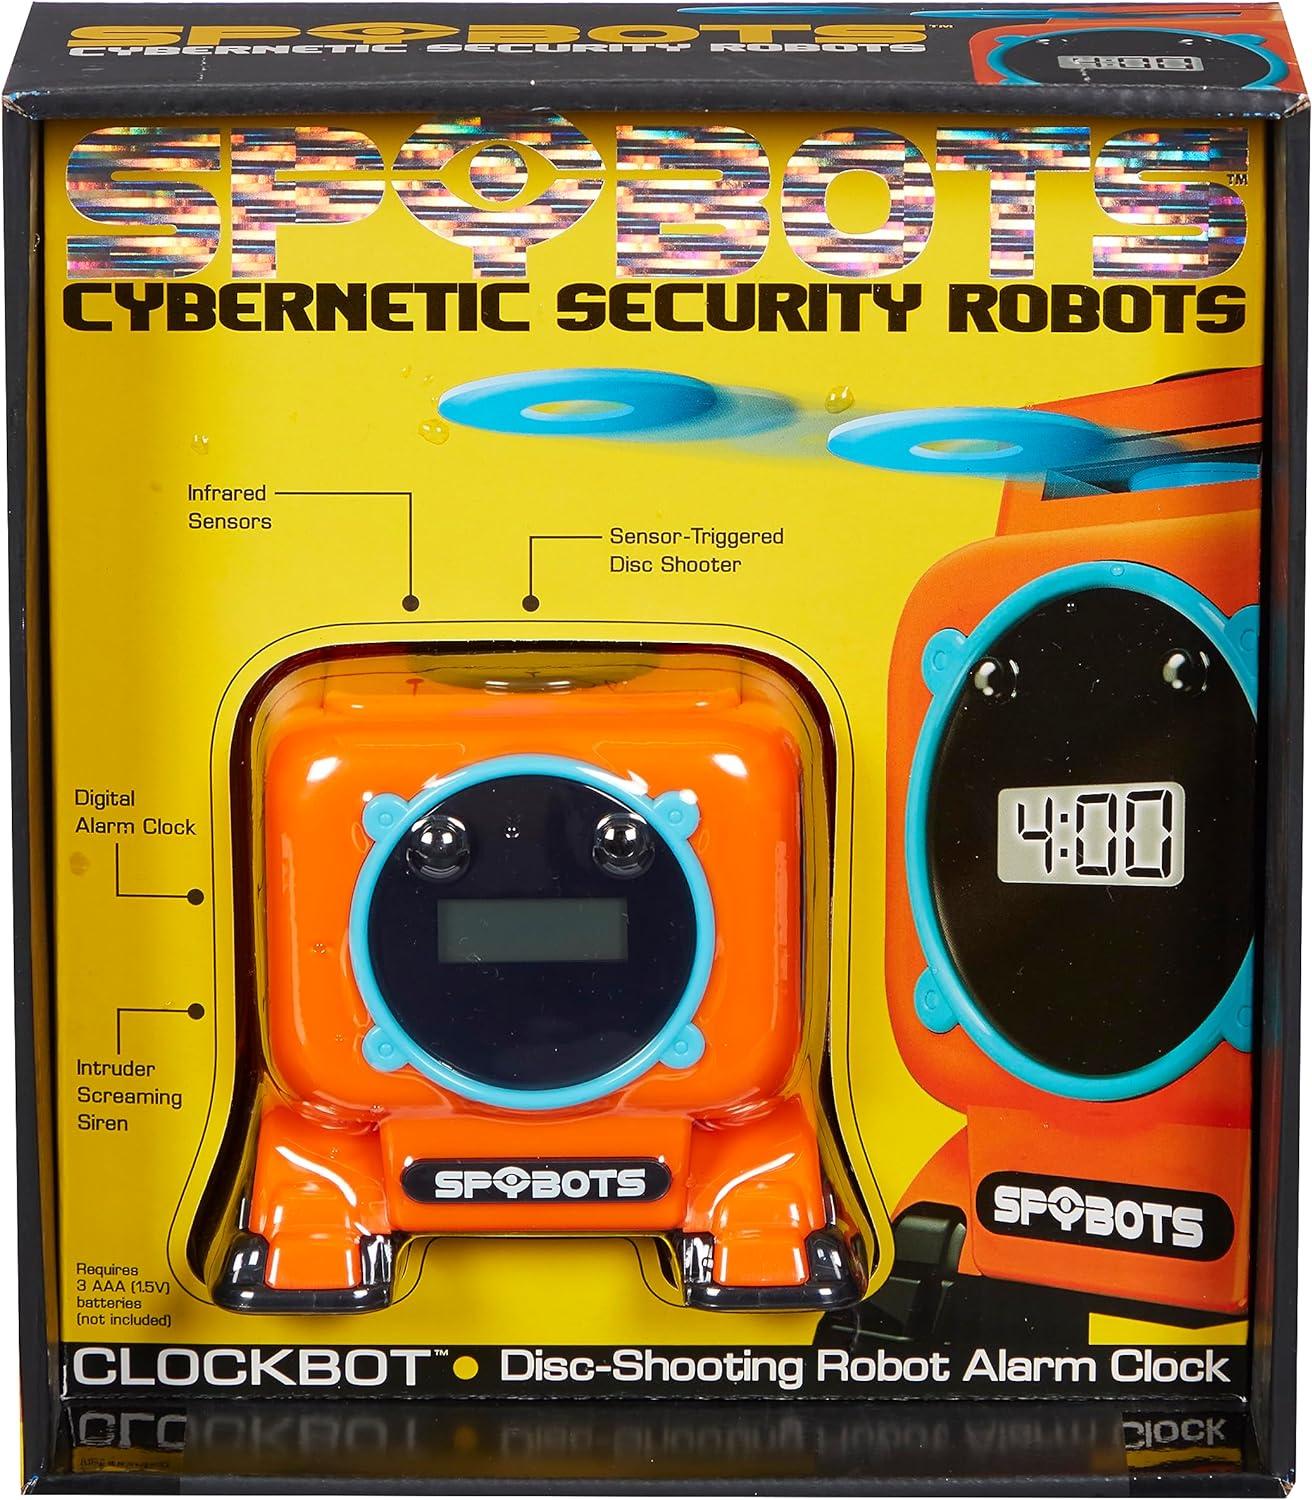 Spybots CLOCKBOT Cyber Security Robots